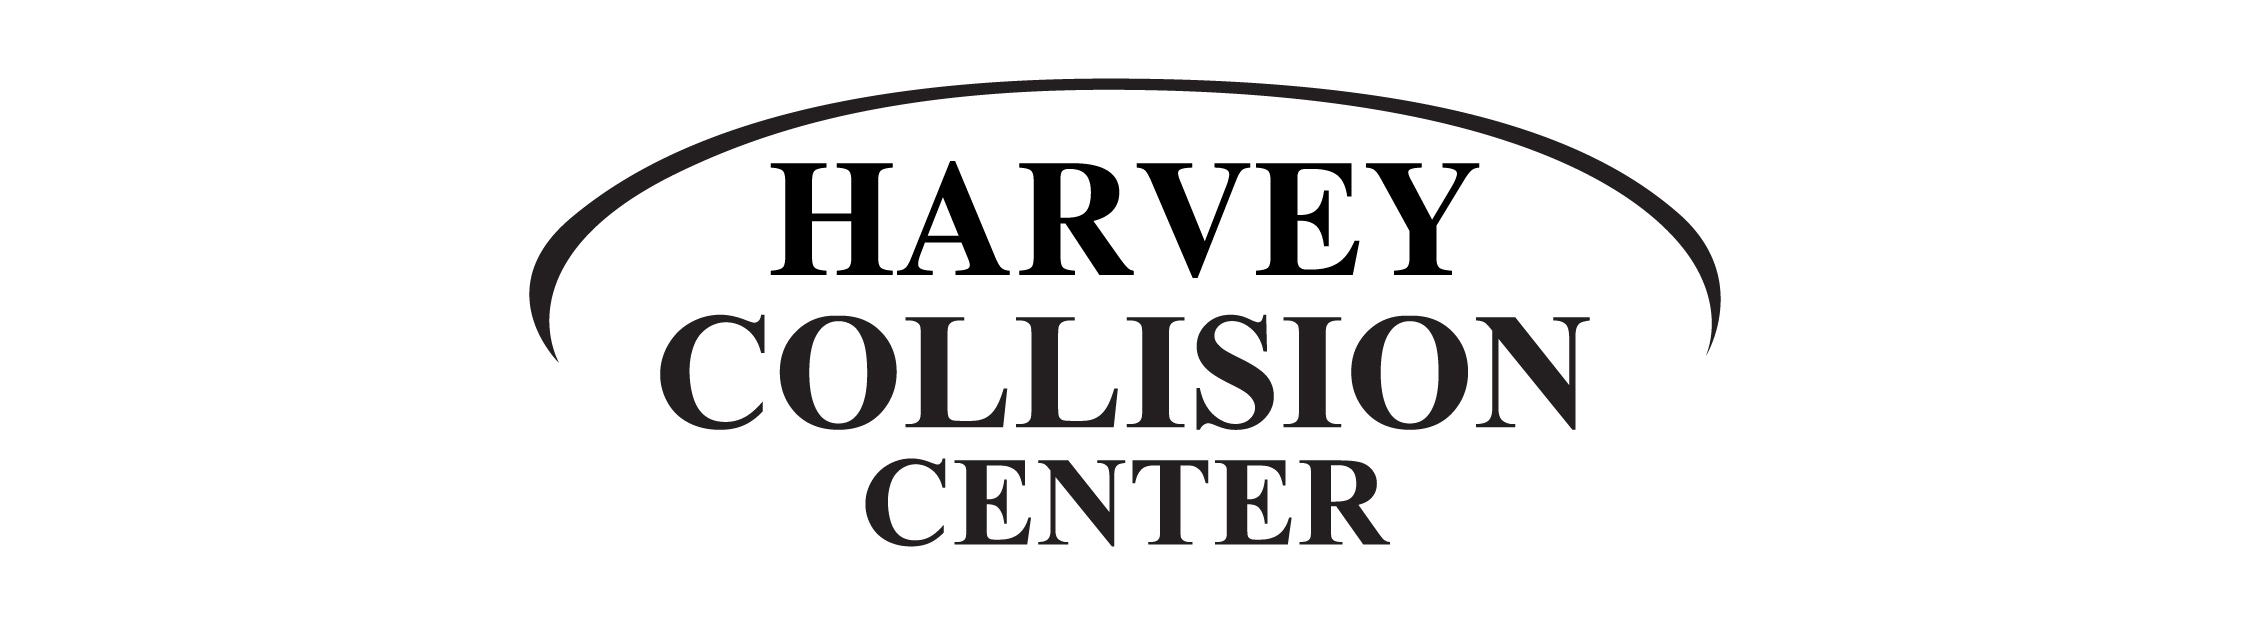 Harvey Collison Center